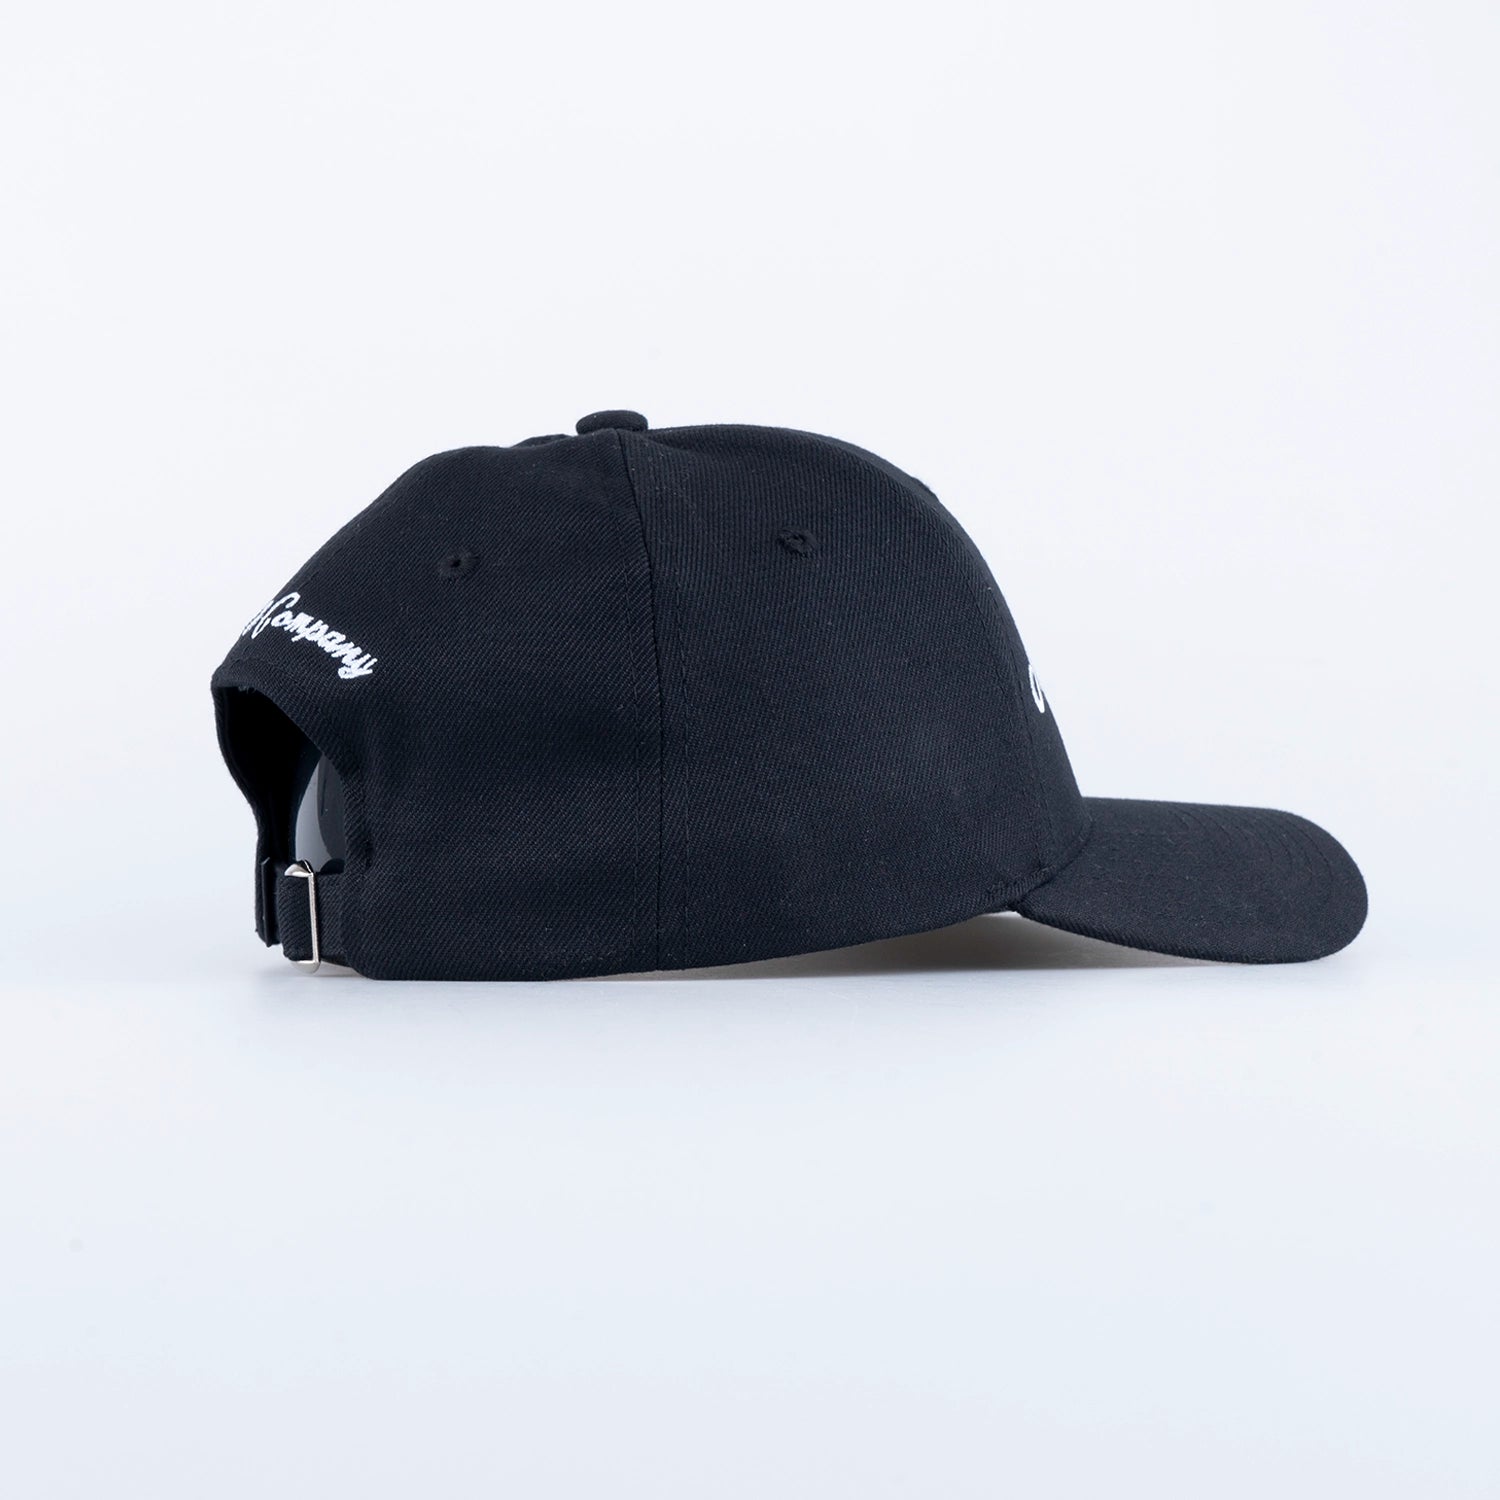 GREAT NORRLAND CAP - HOOKED ÖIK BLACK